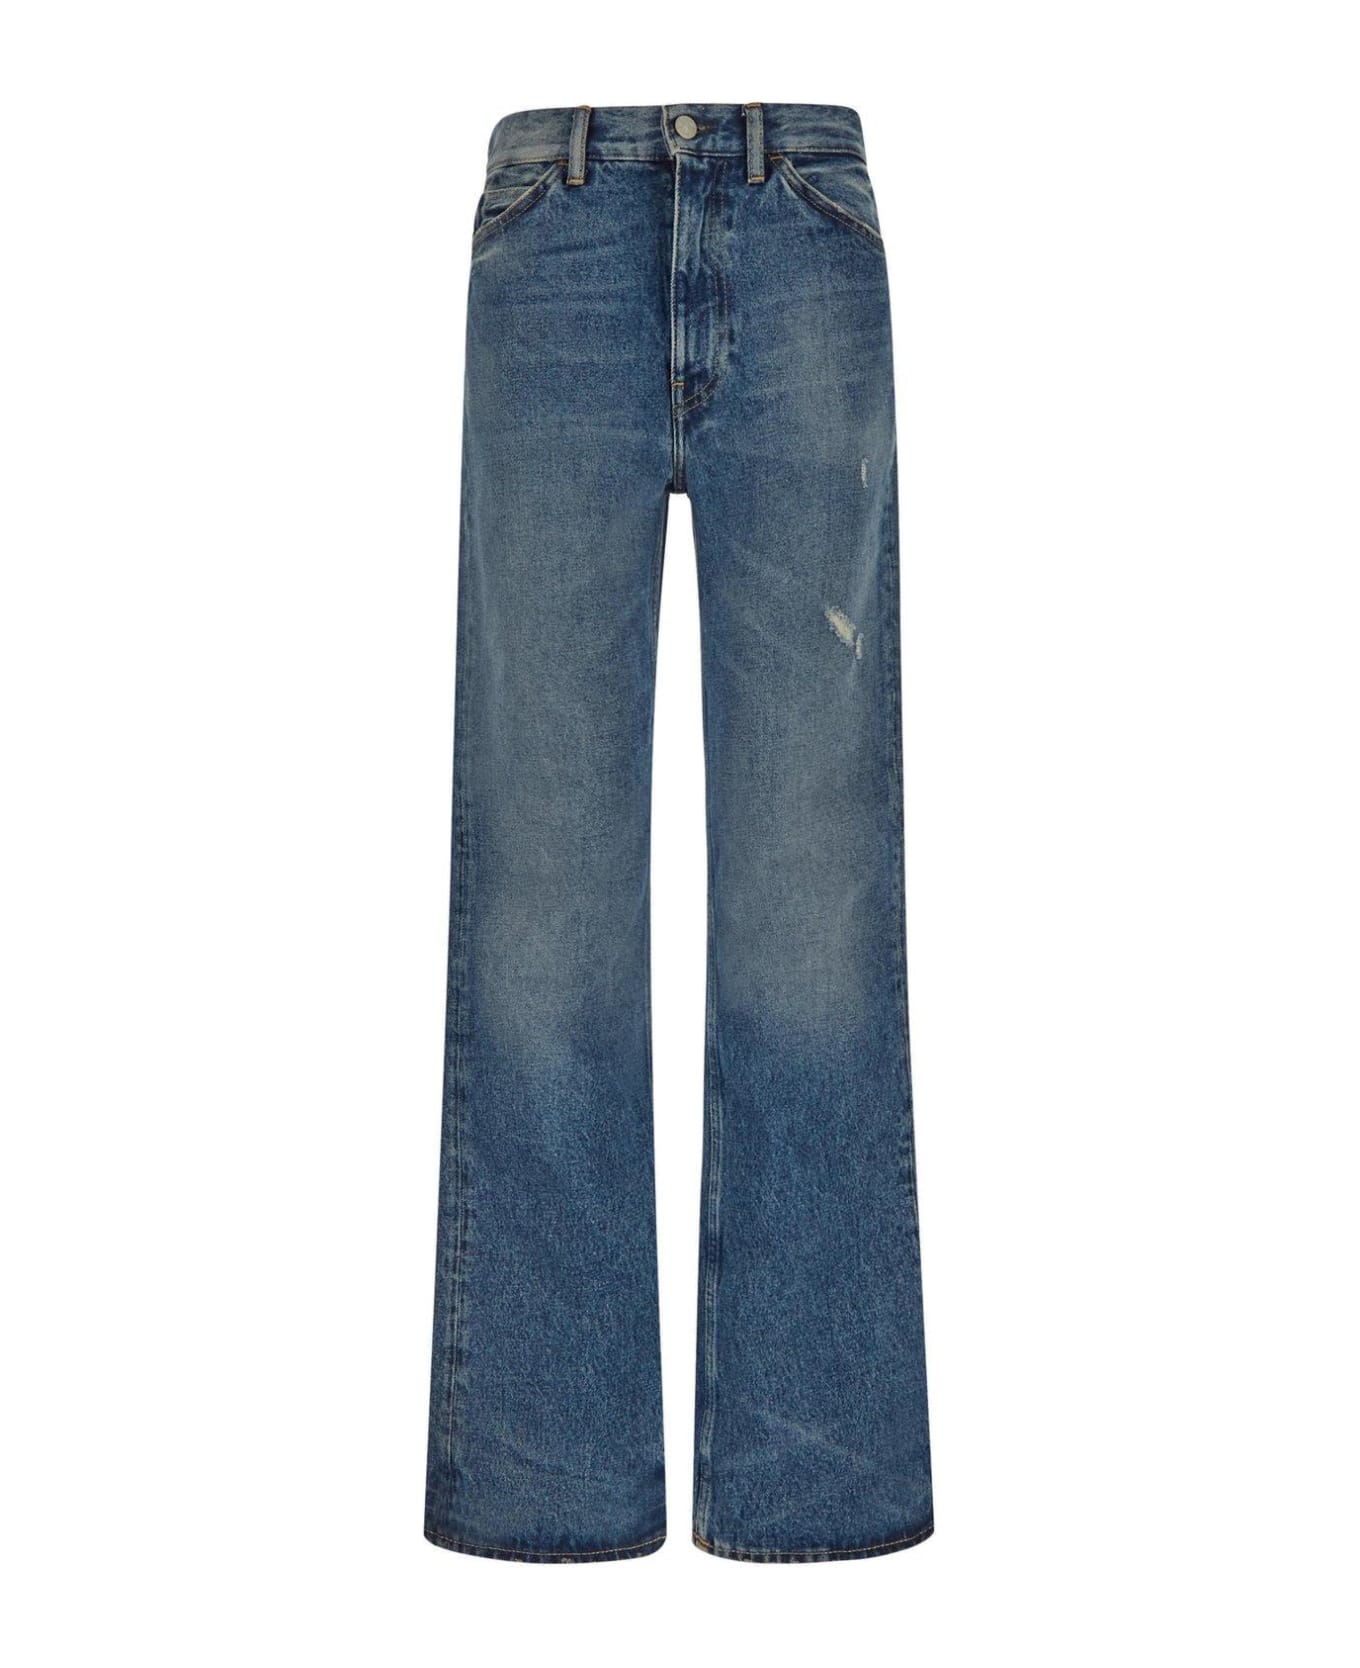 Acne Studios Distressed Mid-rise Jeans - Vintage blue